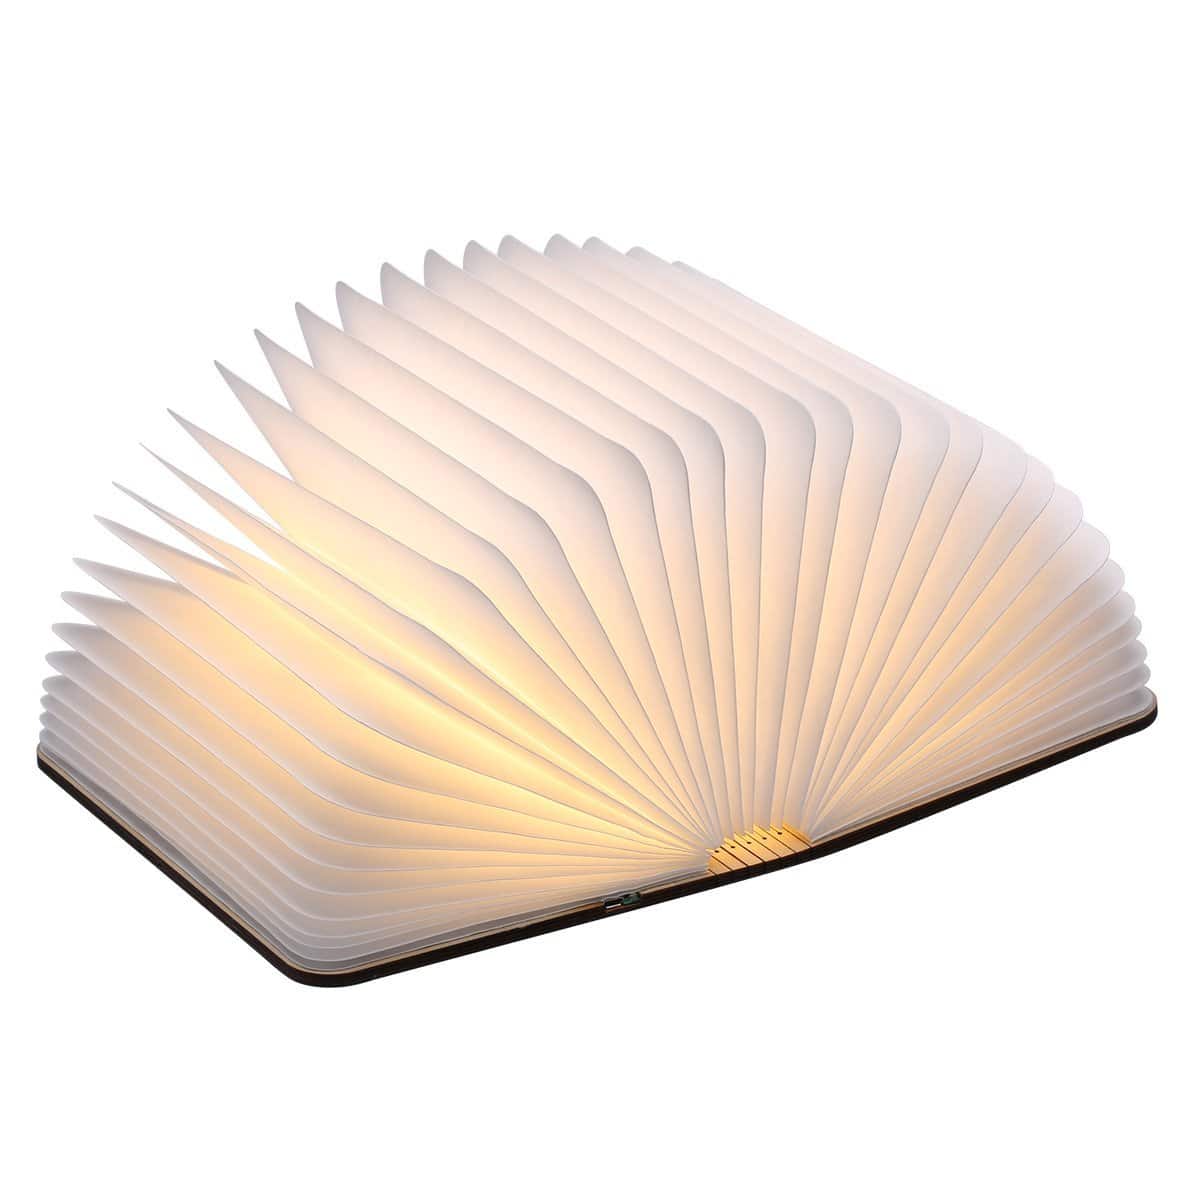 LIGHTNING DEAL ALERT! Rechargeable Magnetic Wooden Folding LED Night Light Book Light – 62% off